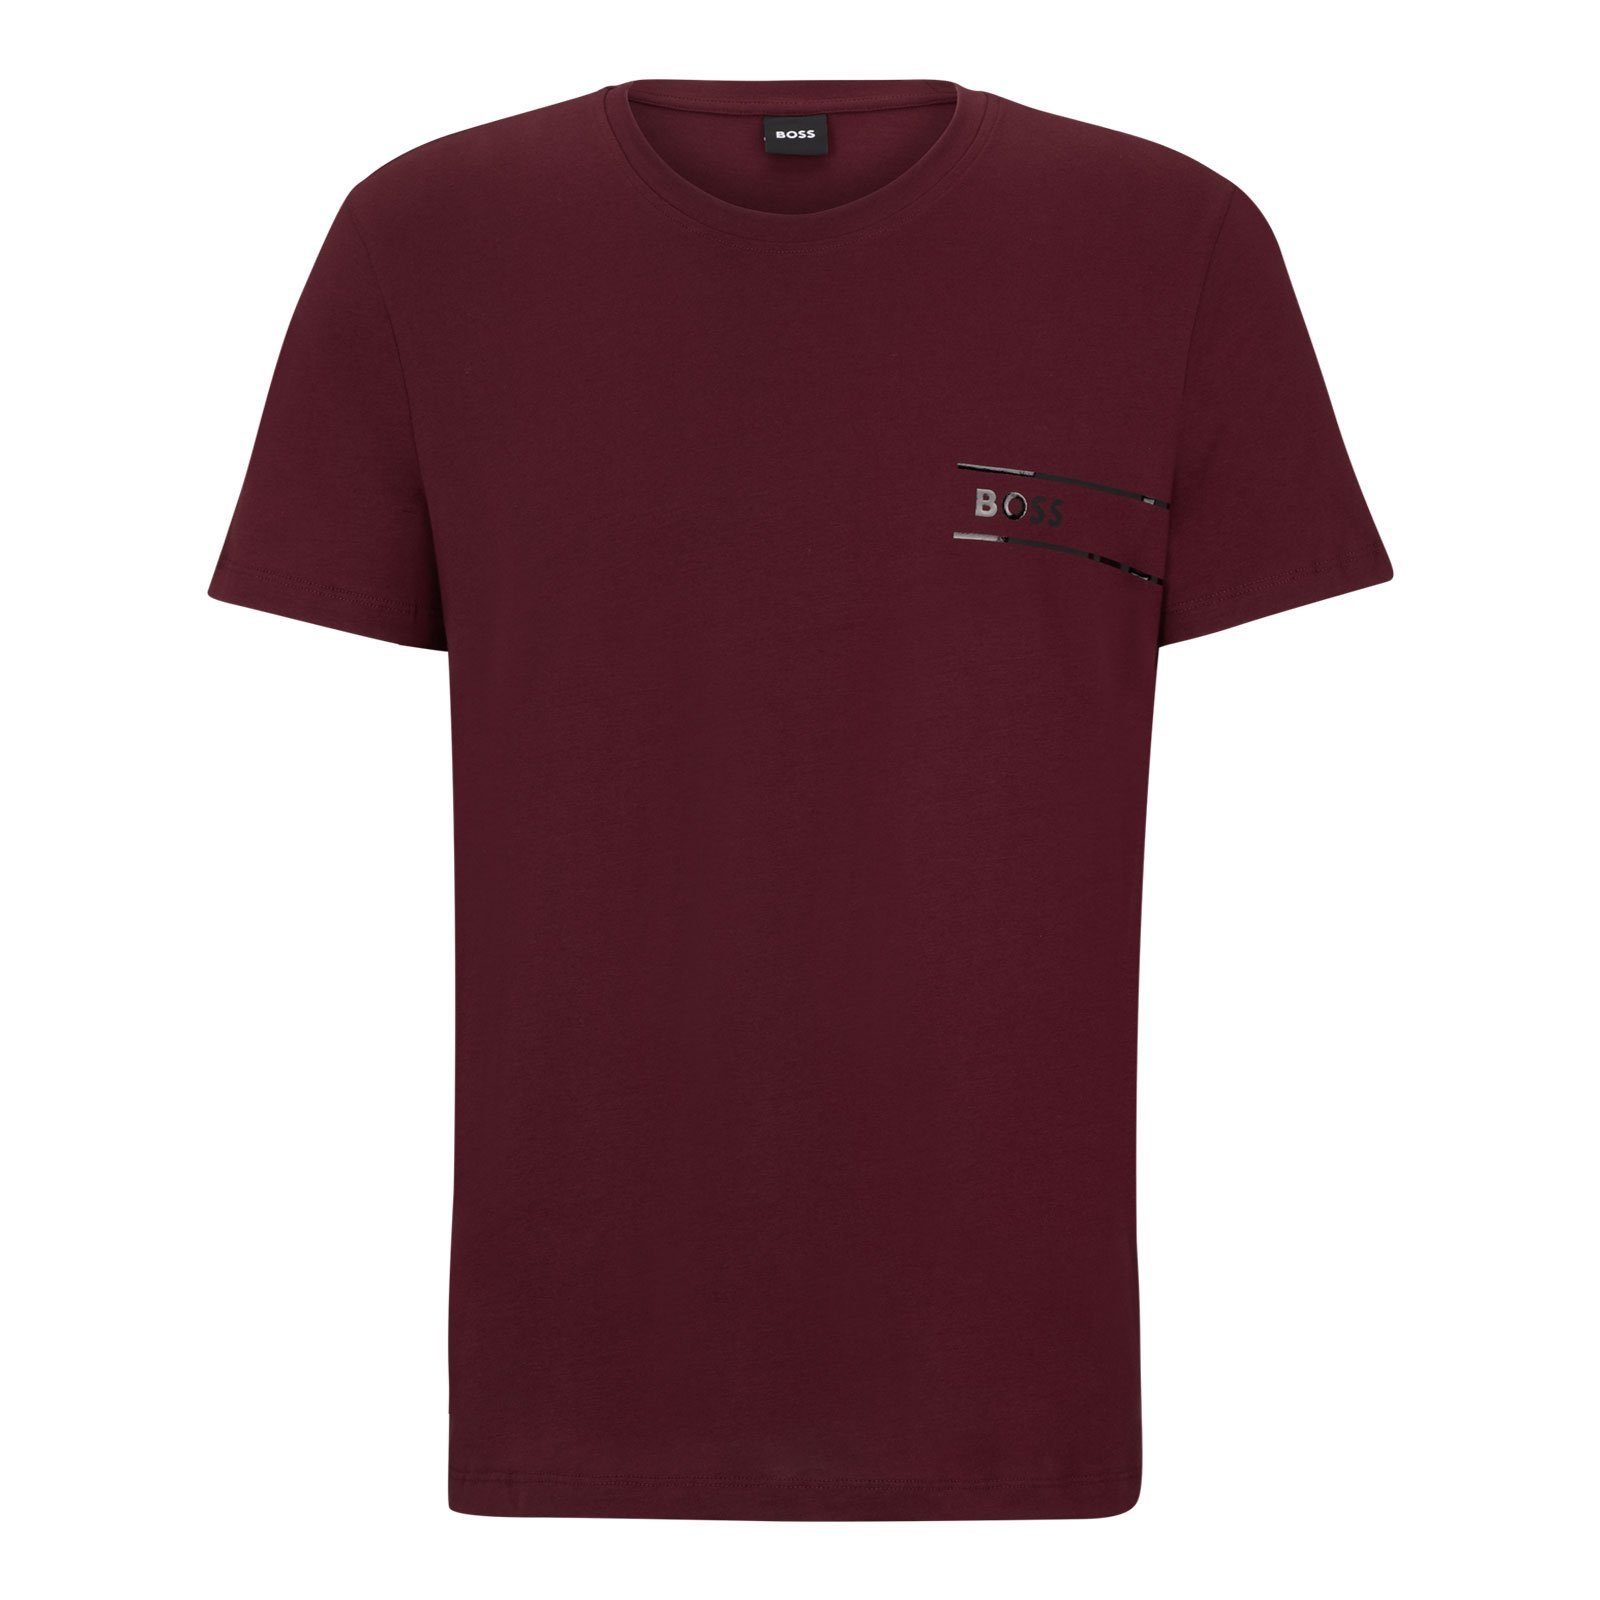 BOSS T-Shirt T-Shirt RN 24 602 dark red mit Markenprint